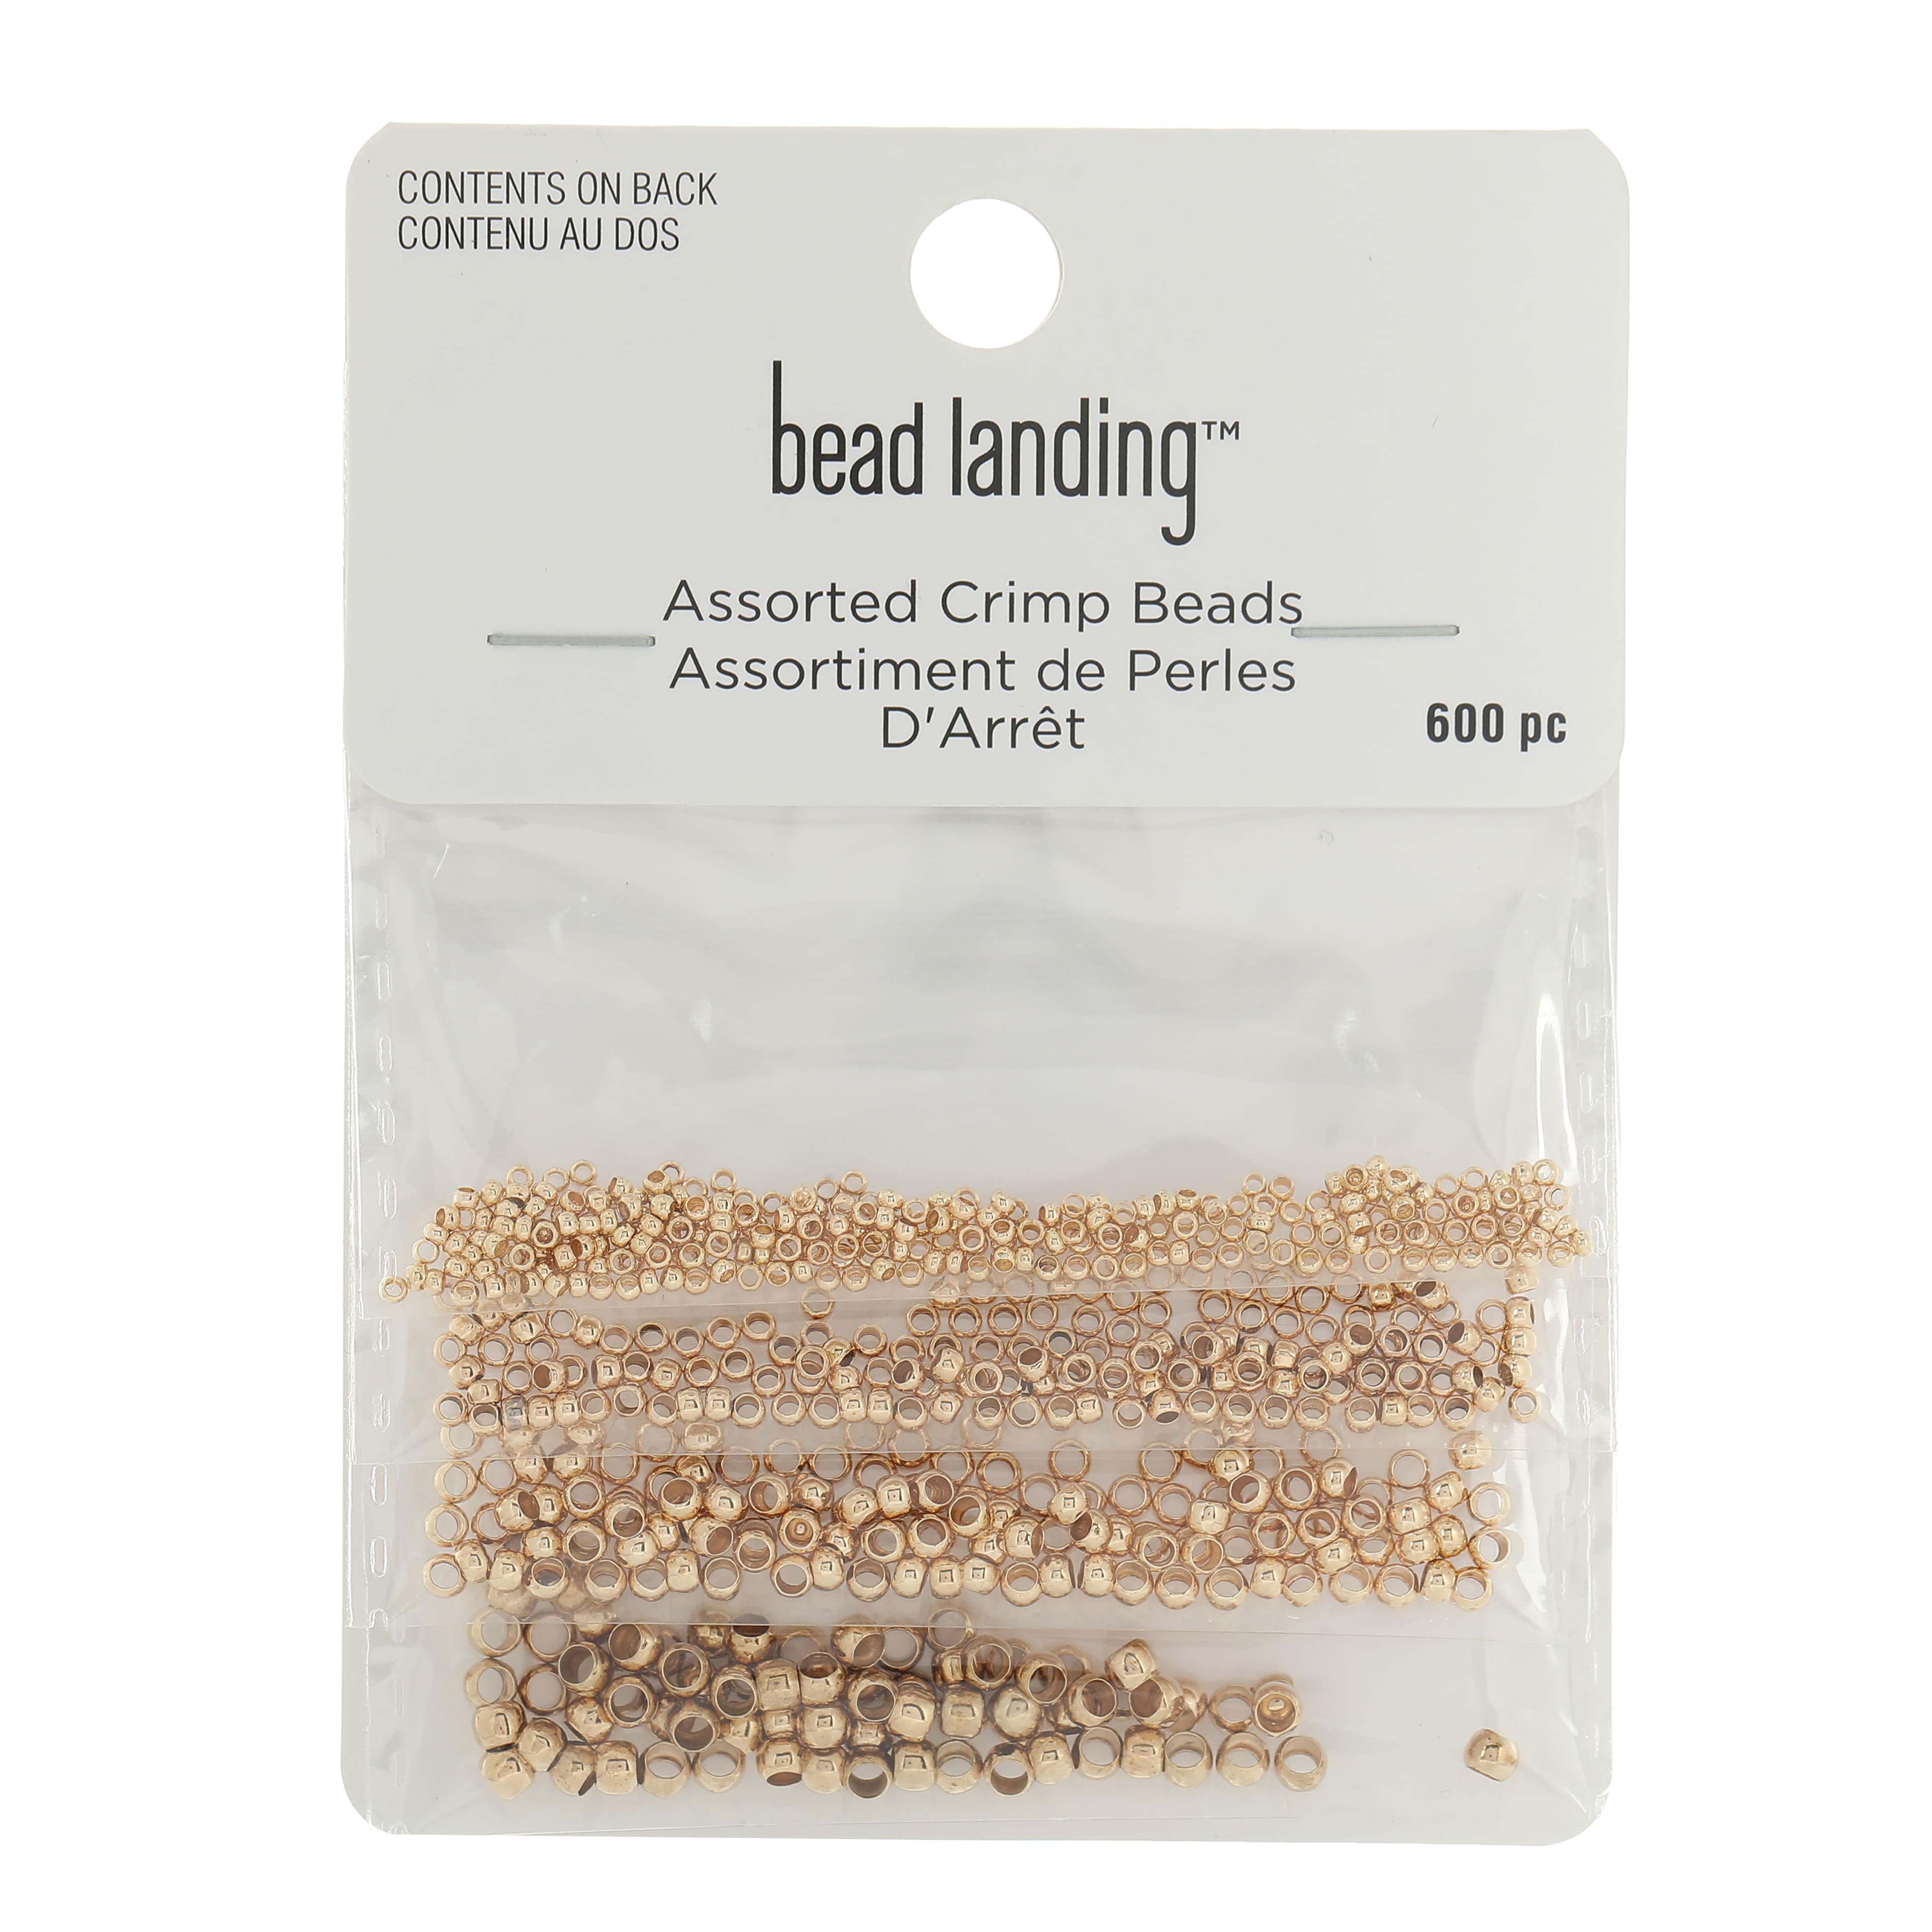 12 Packs: 600 ct. (7,200 total) Assorted Metal Crimp Beads by Bead Landing™